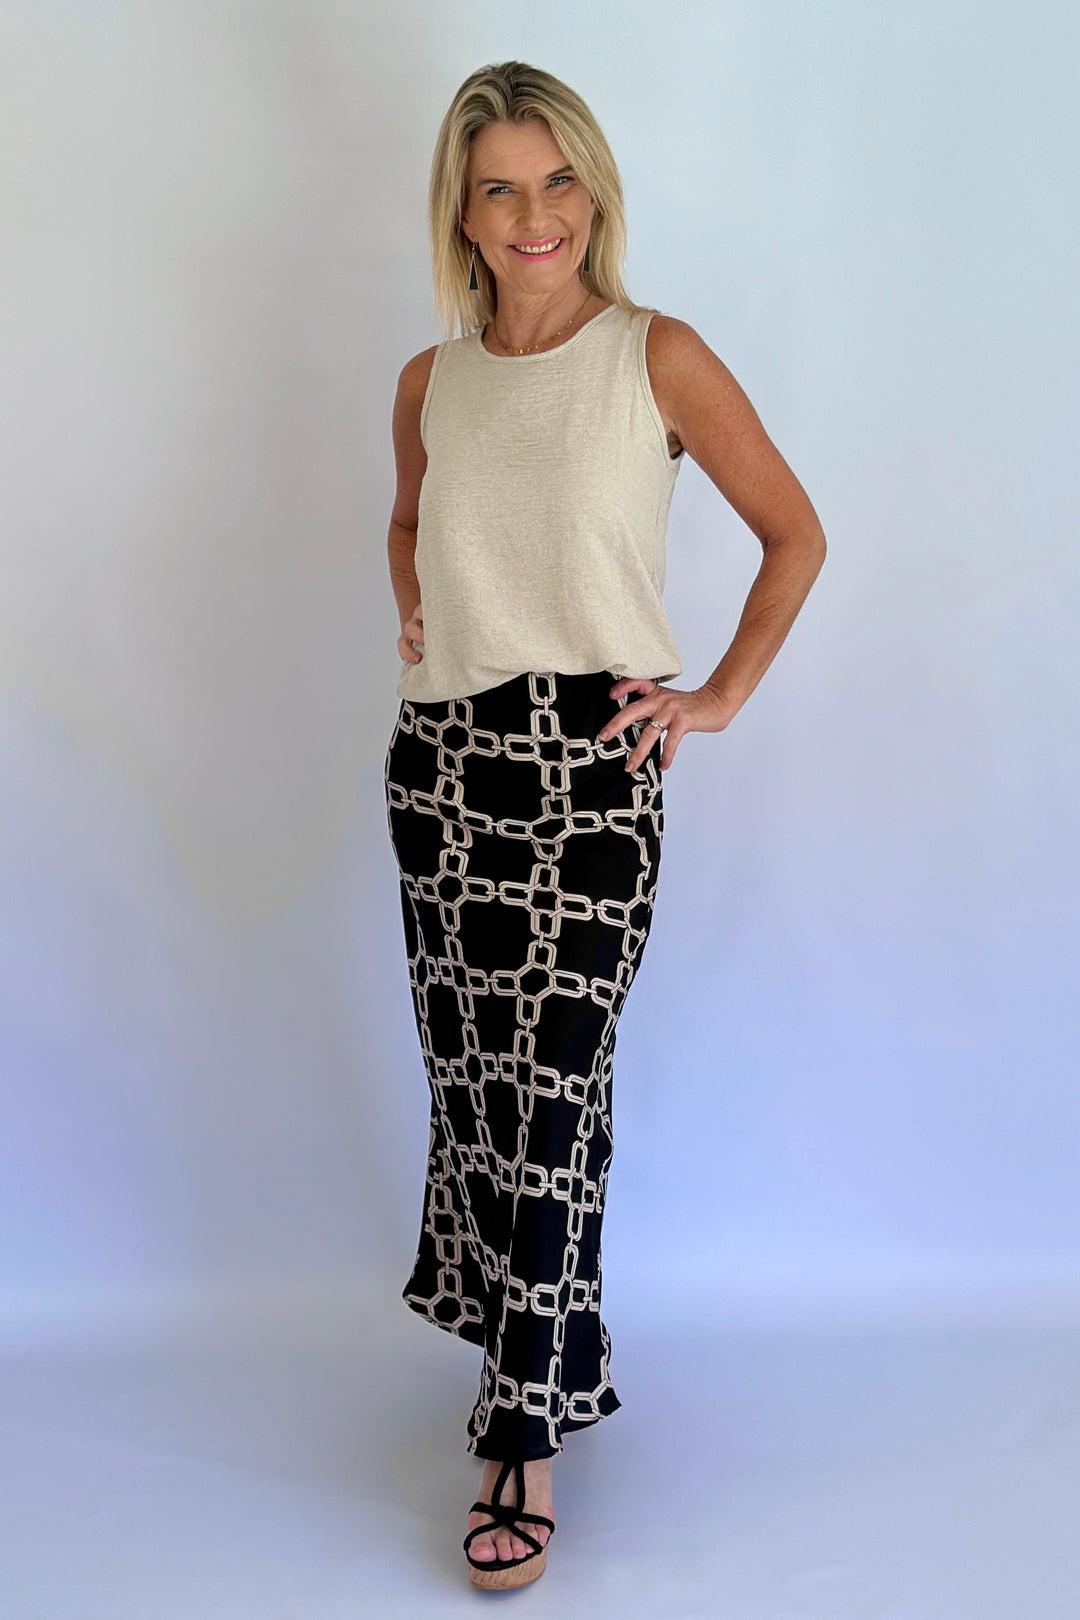 RINIE-Skirt-Wendy Bashford Designs